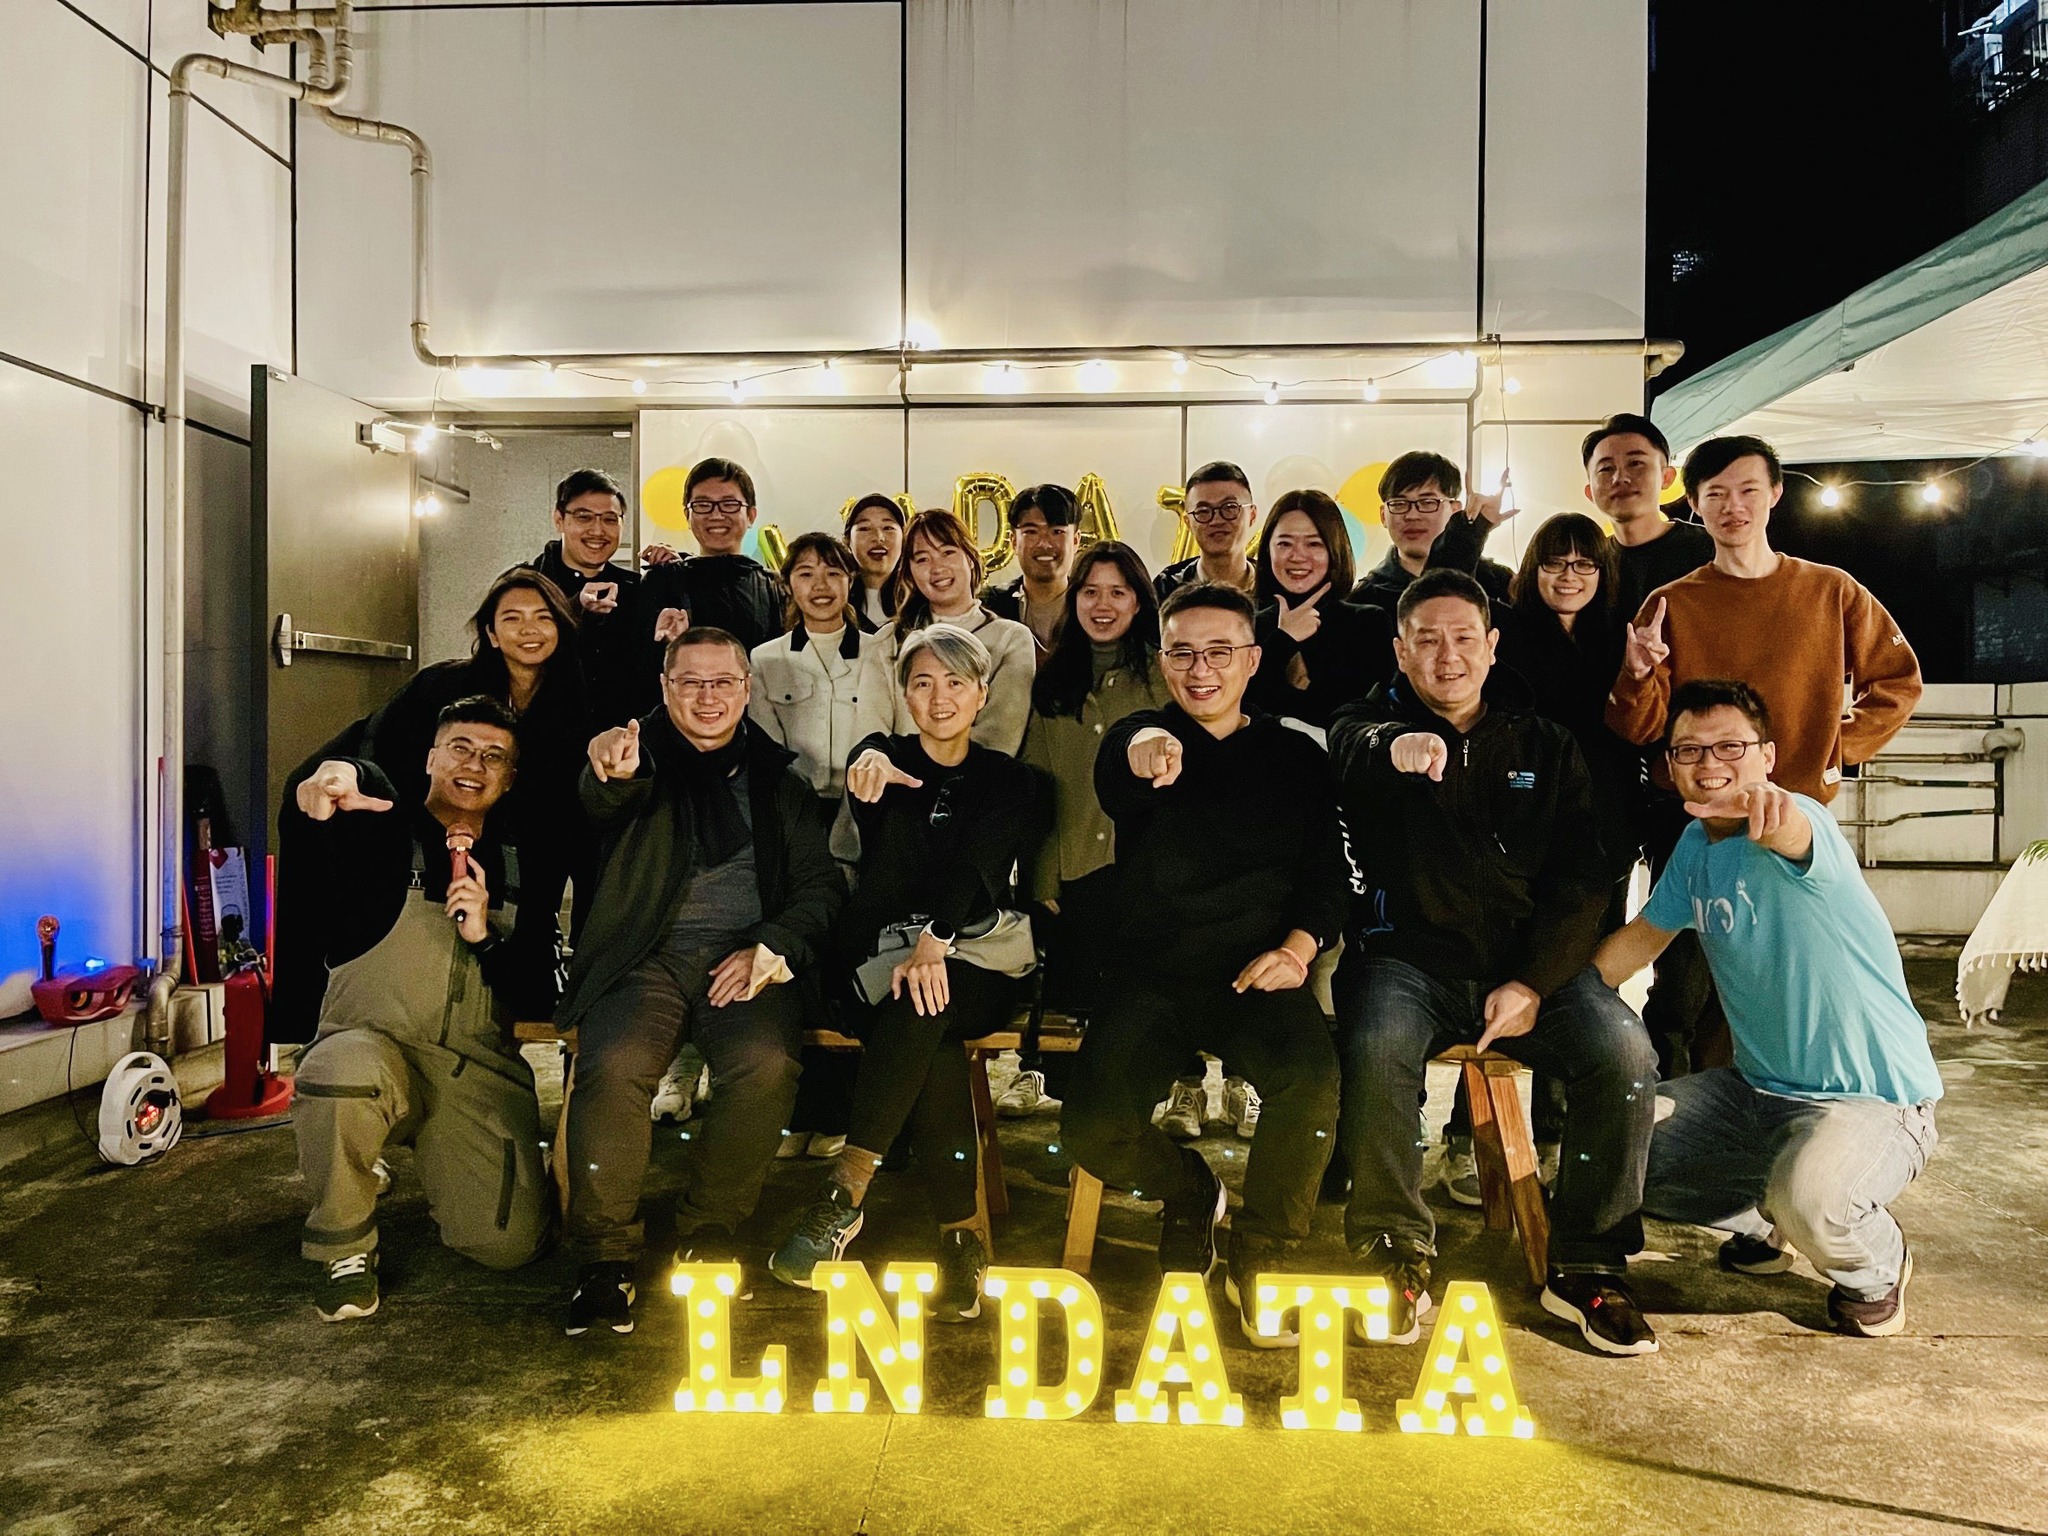 LnData Team